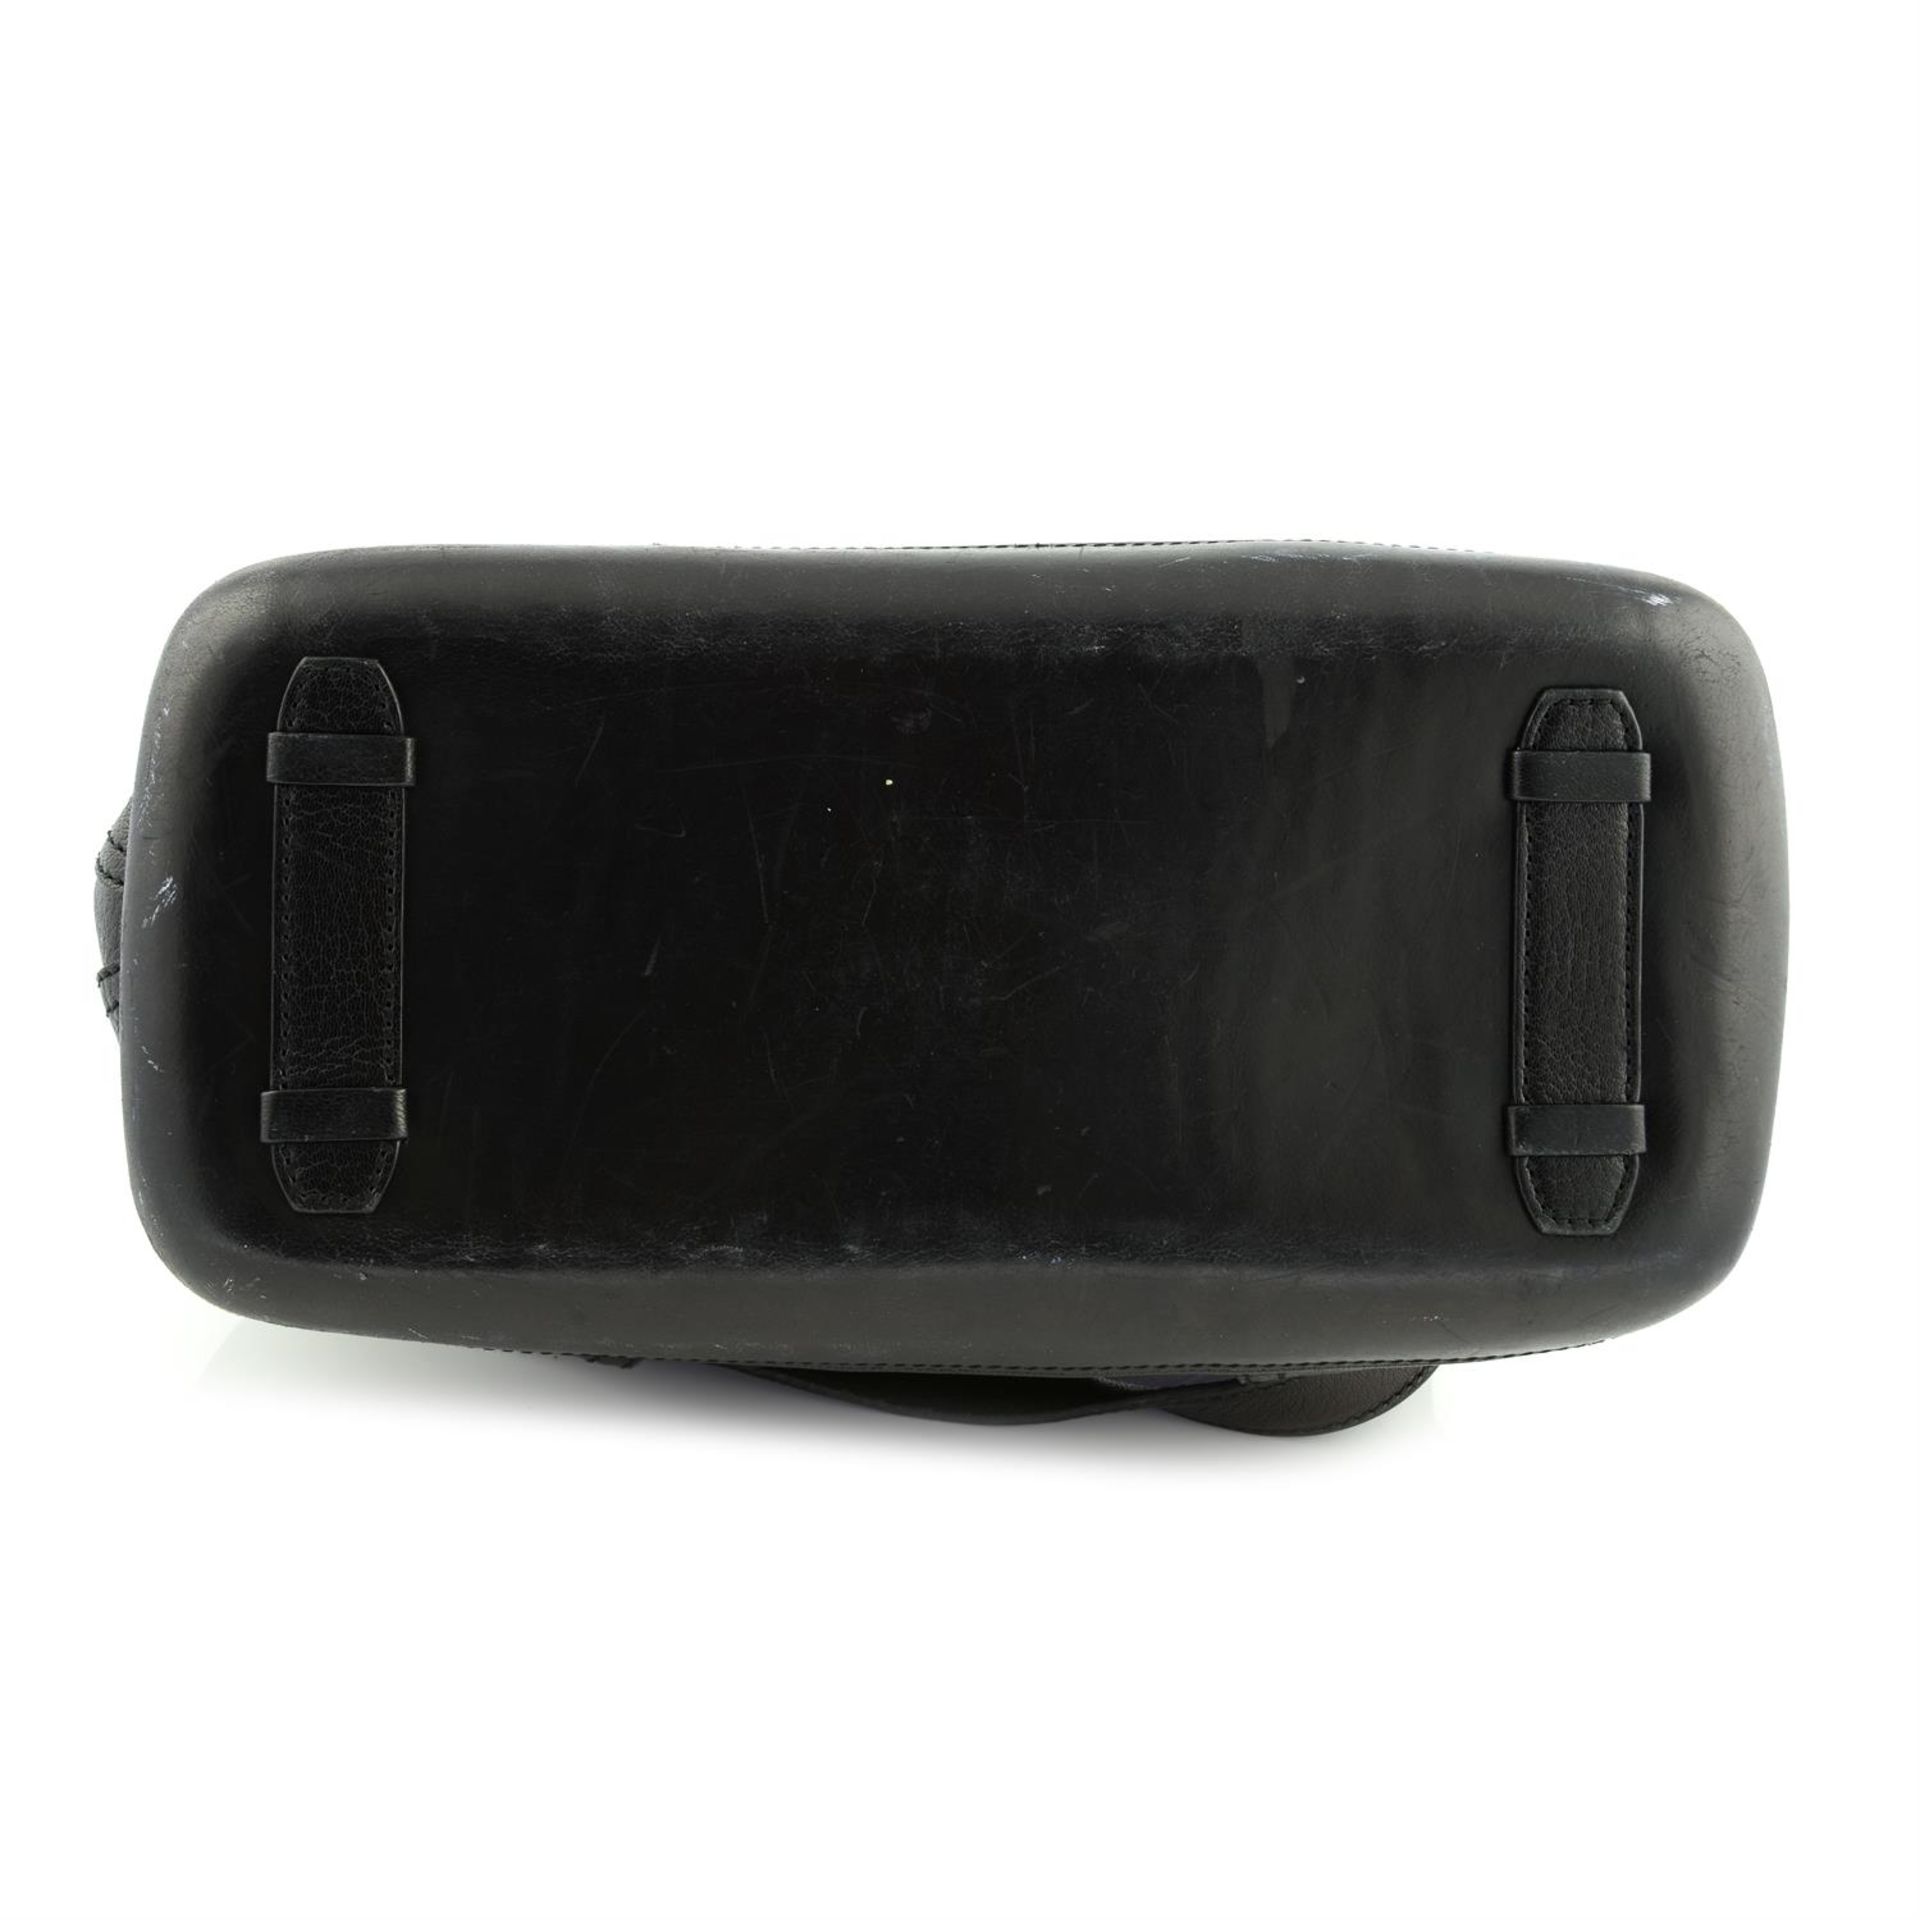 CÉLINE - a black leather handbag. - Image 4 of 6